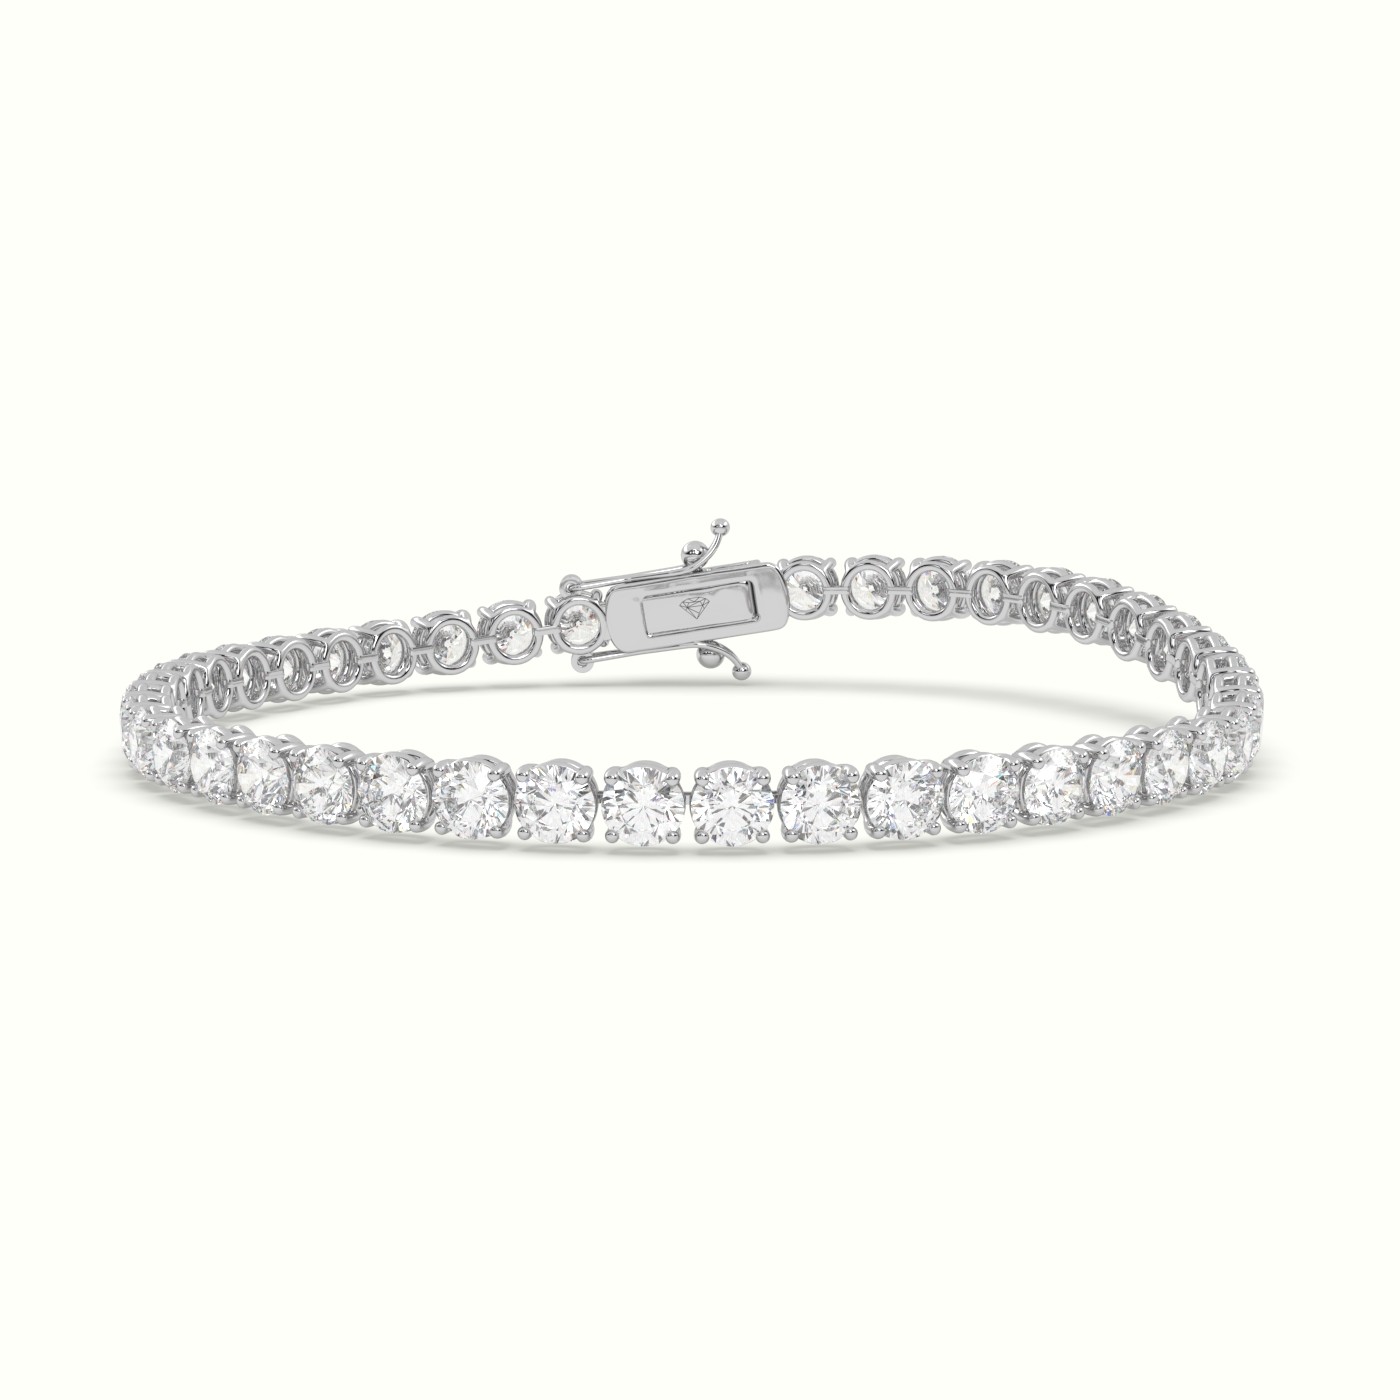 18k white gold  tennis bracelet 8.80 carat diamonds